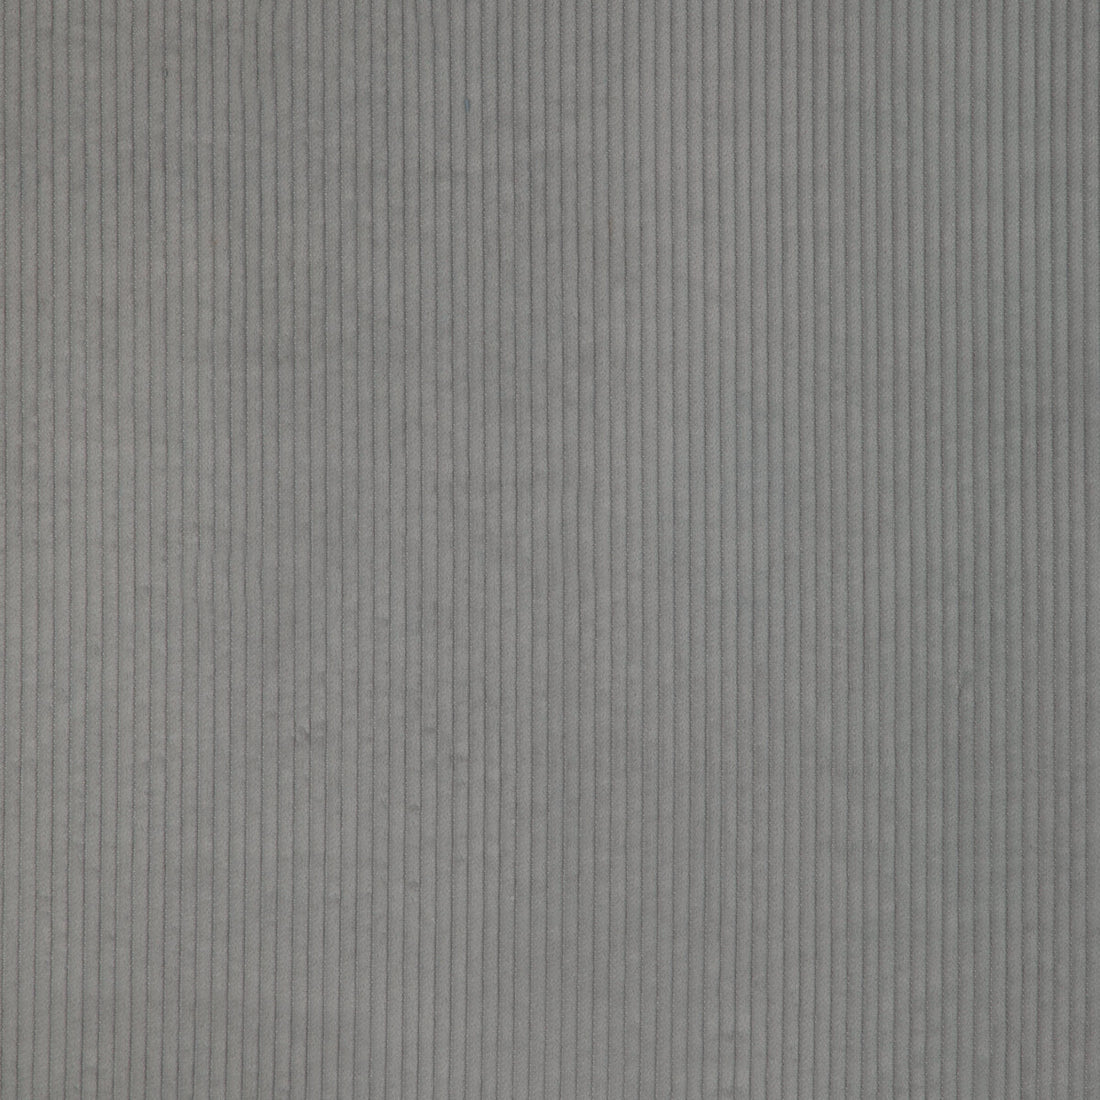 Kravet Smart fabric in 37006-11 color - pattern 37006.11.0 - by Kravet Smart